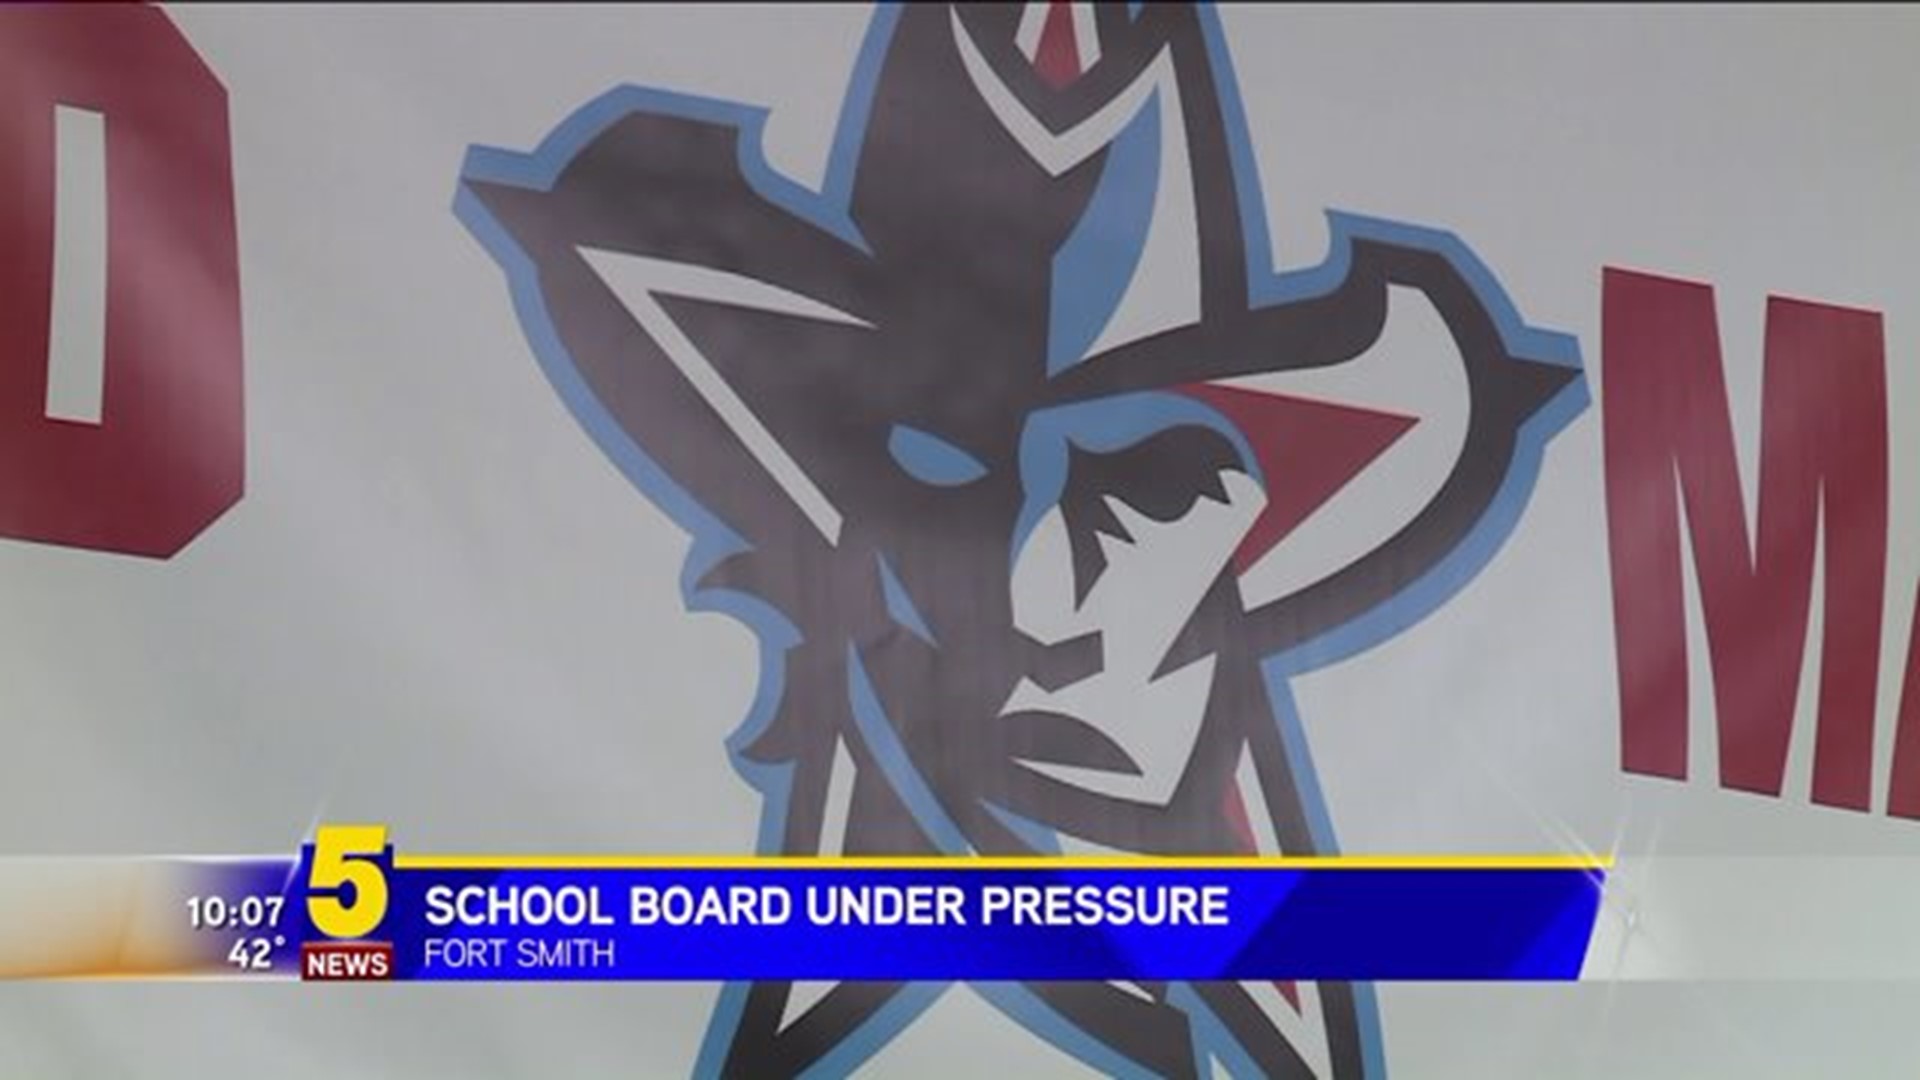 School Board Under Pressure